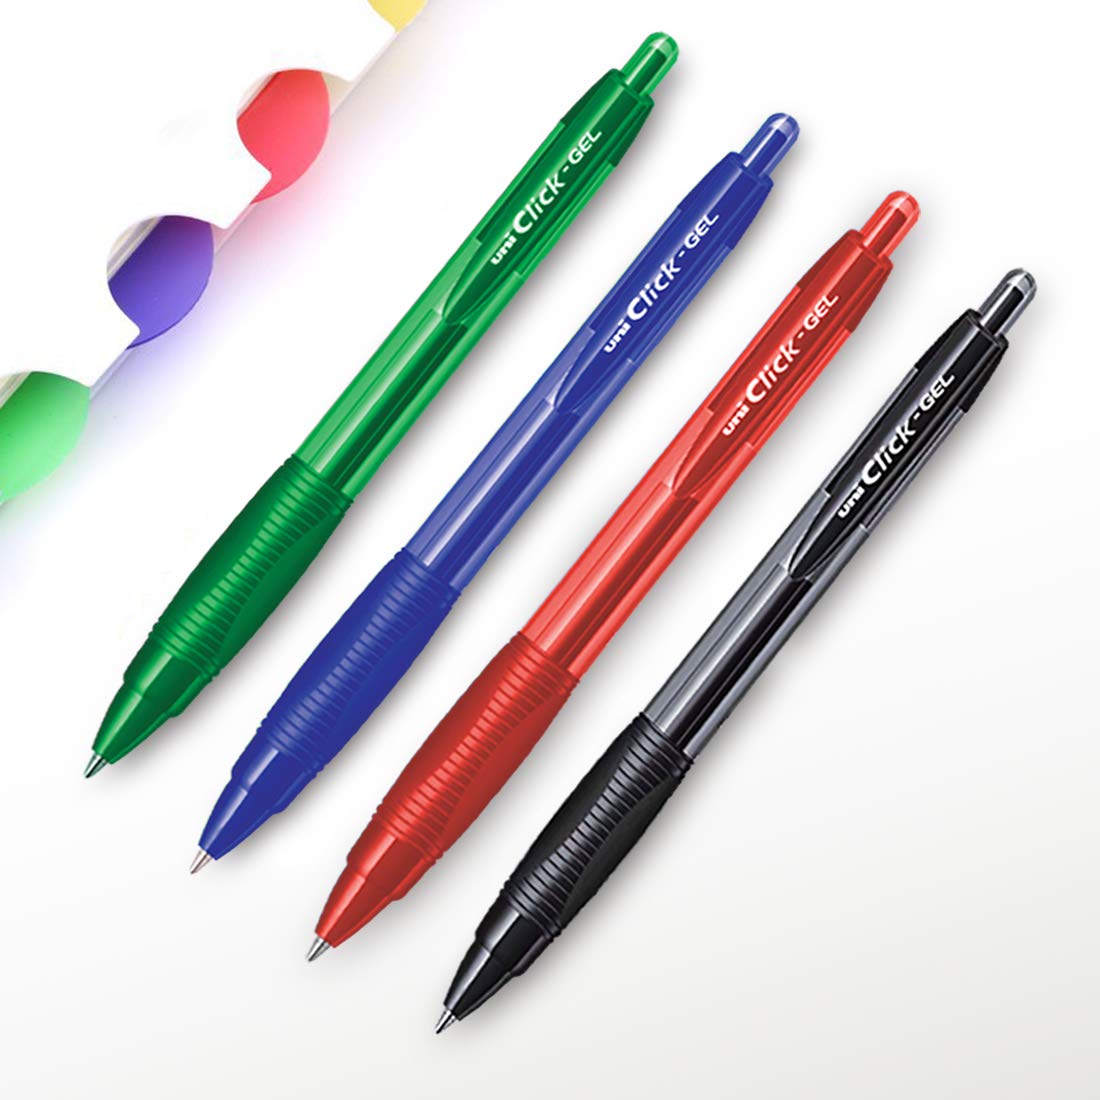 Rollerball Pens Pentel Energel X BL07 Retractable Gel 0.7mm